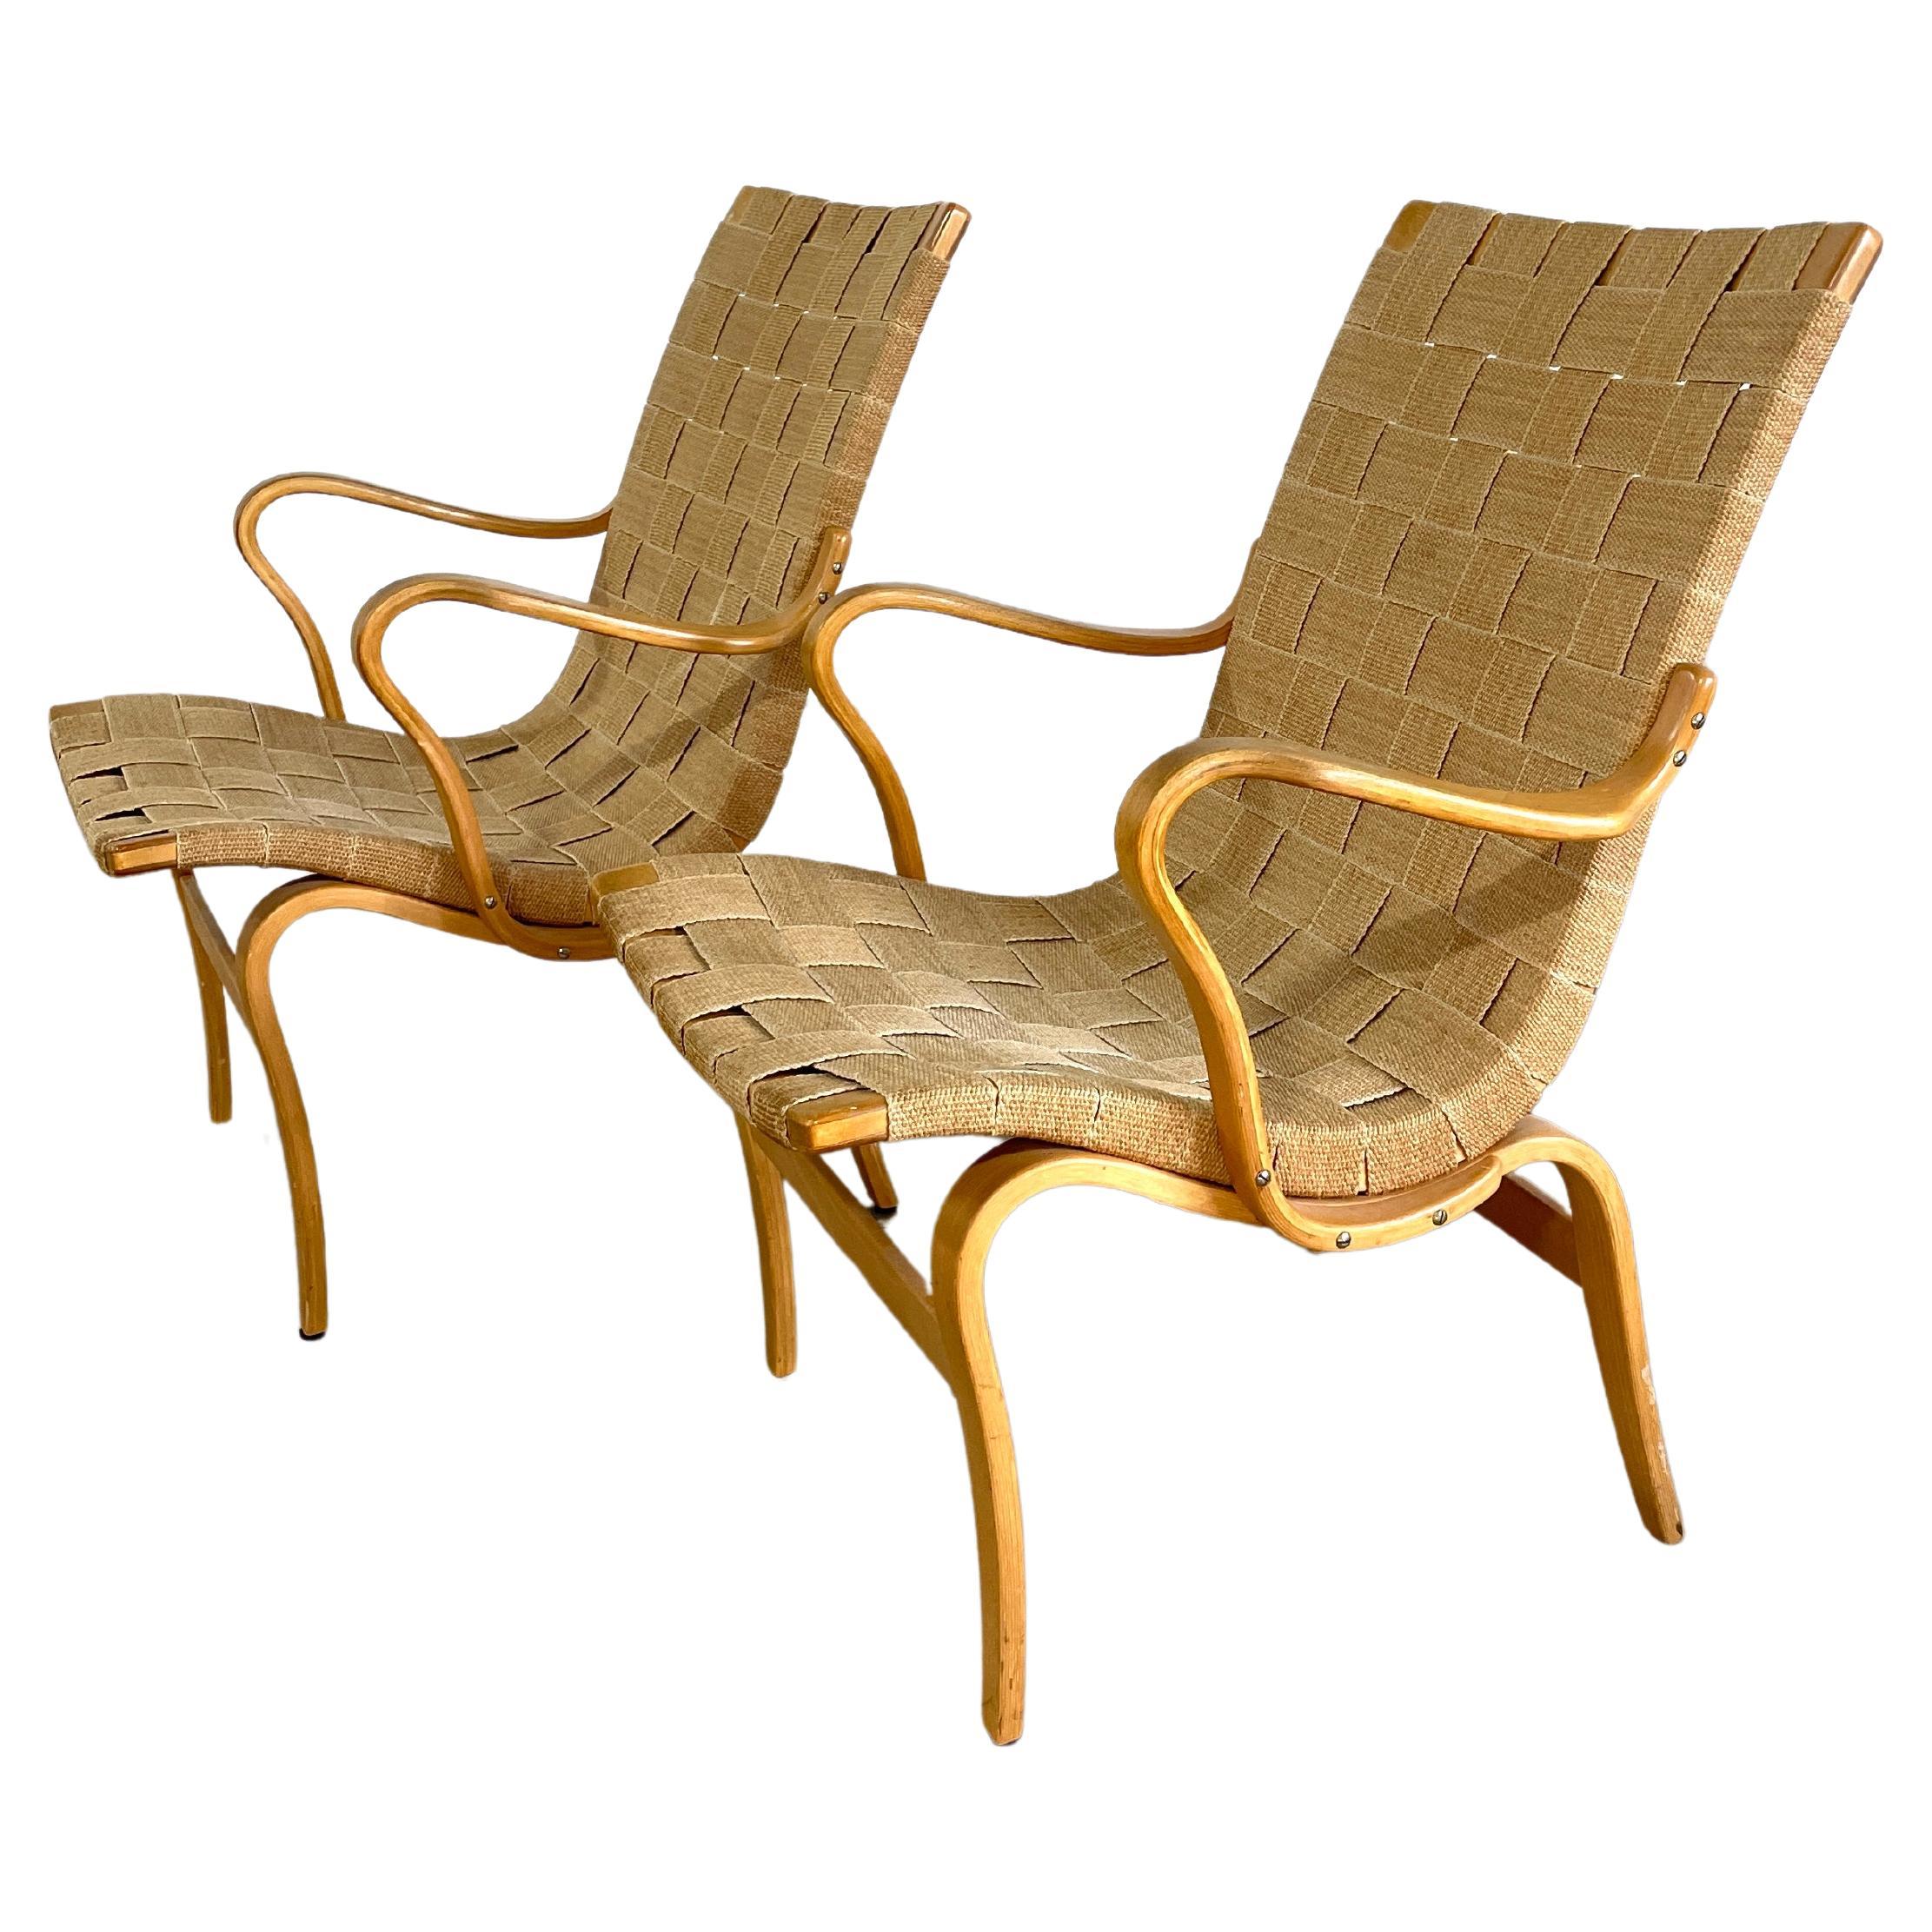 Bruno Mathsson “Eva” Chairs Mid Century Modern - a Pair For Sale